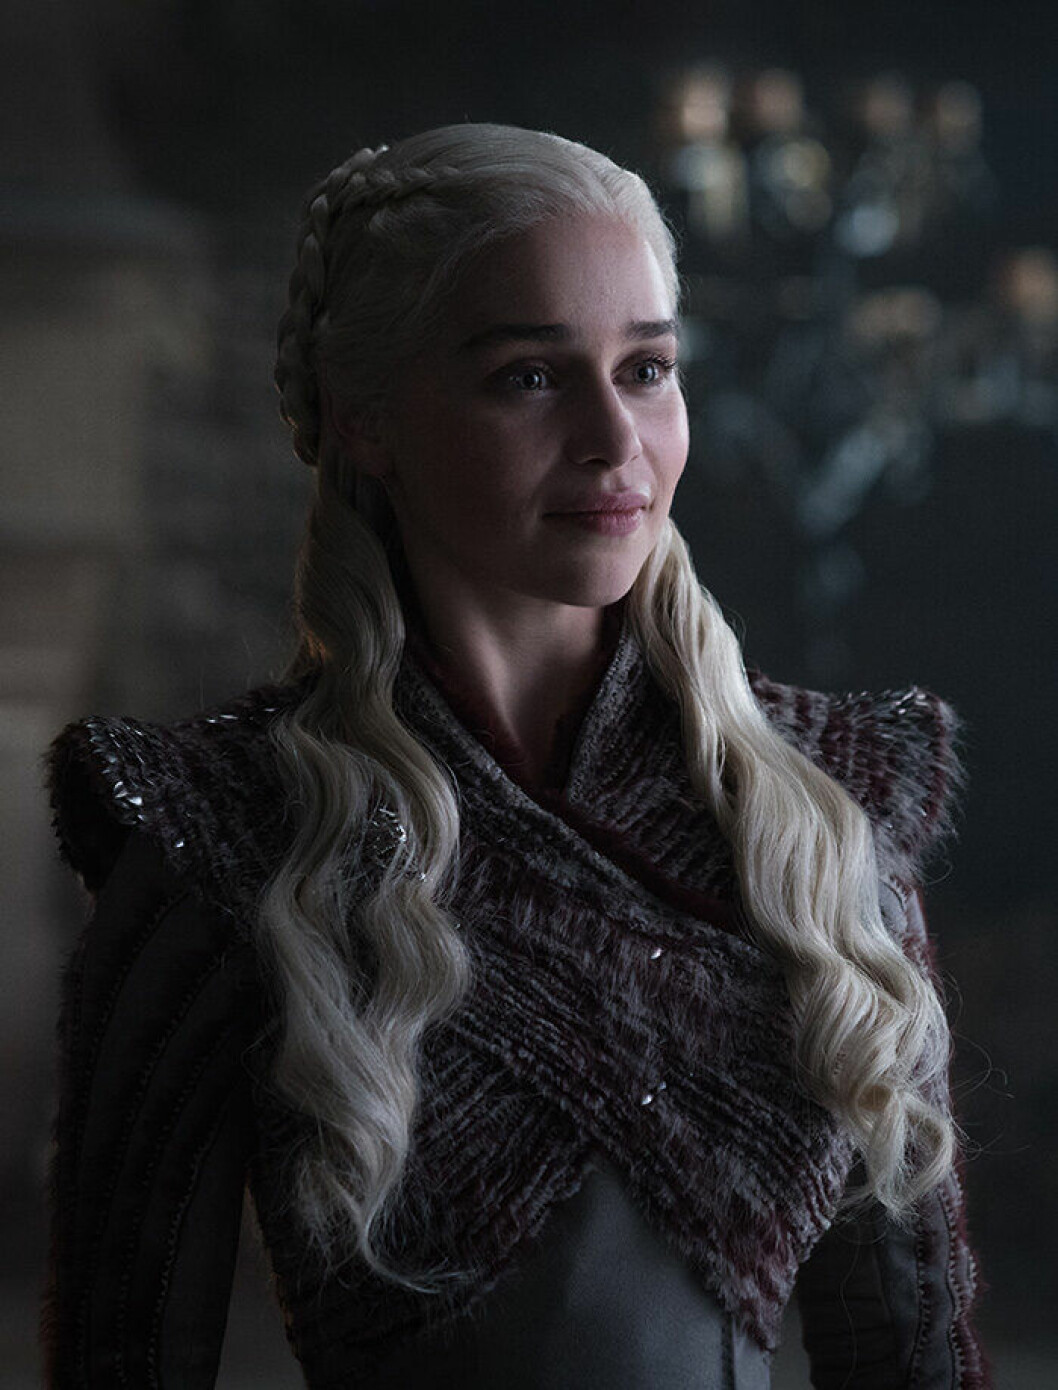 En bild på karaktären Daenerys Targaryen från tv-serien Game of Thrones.